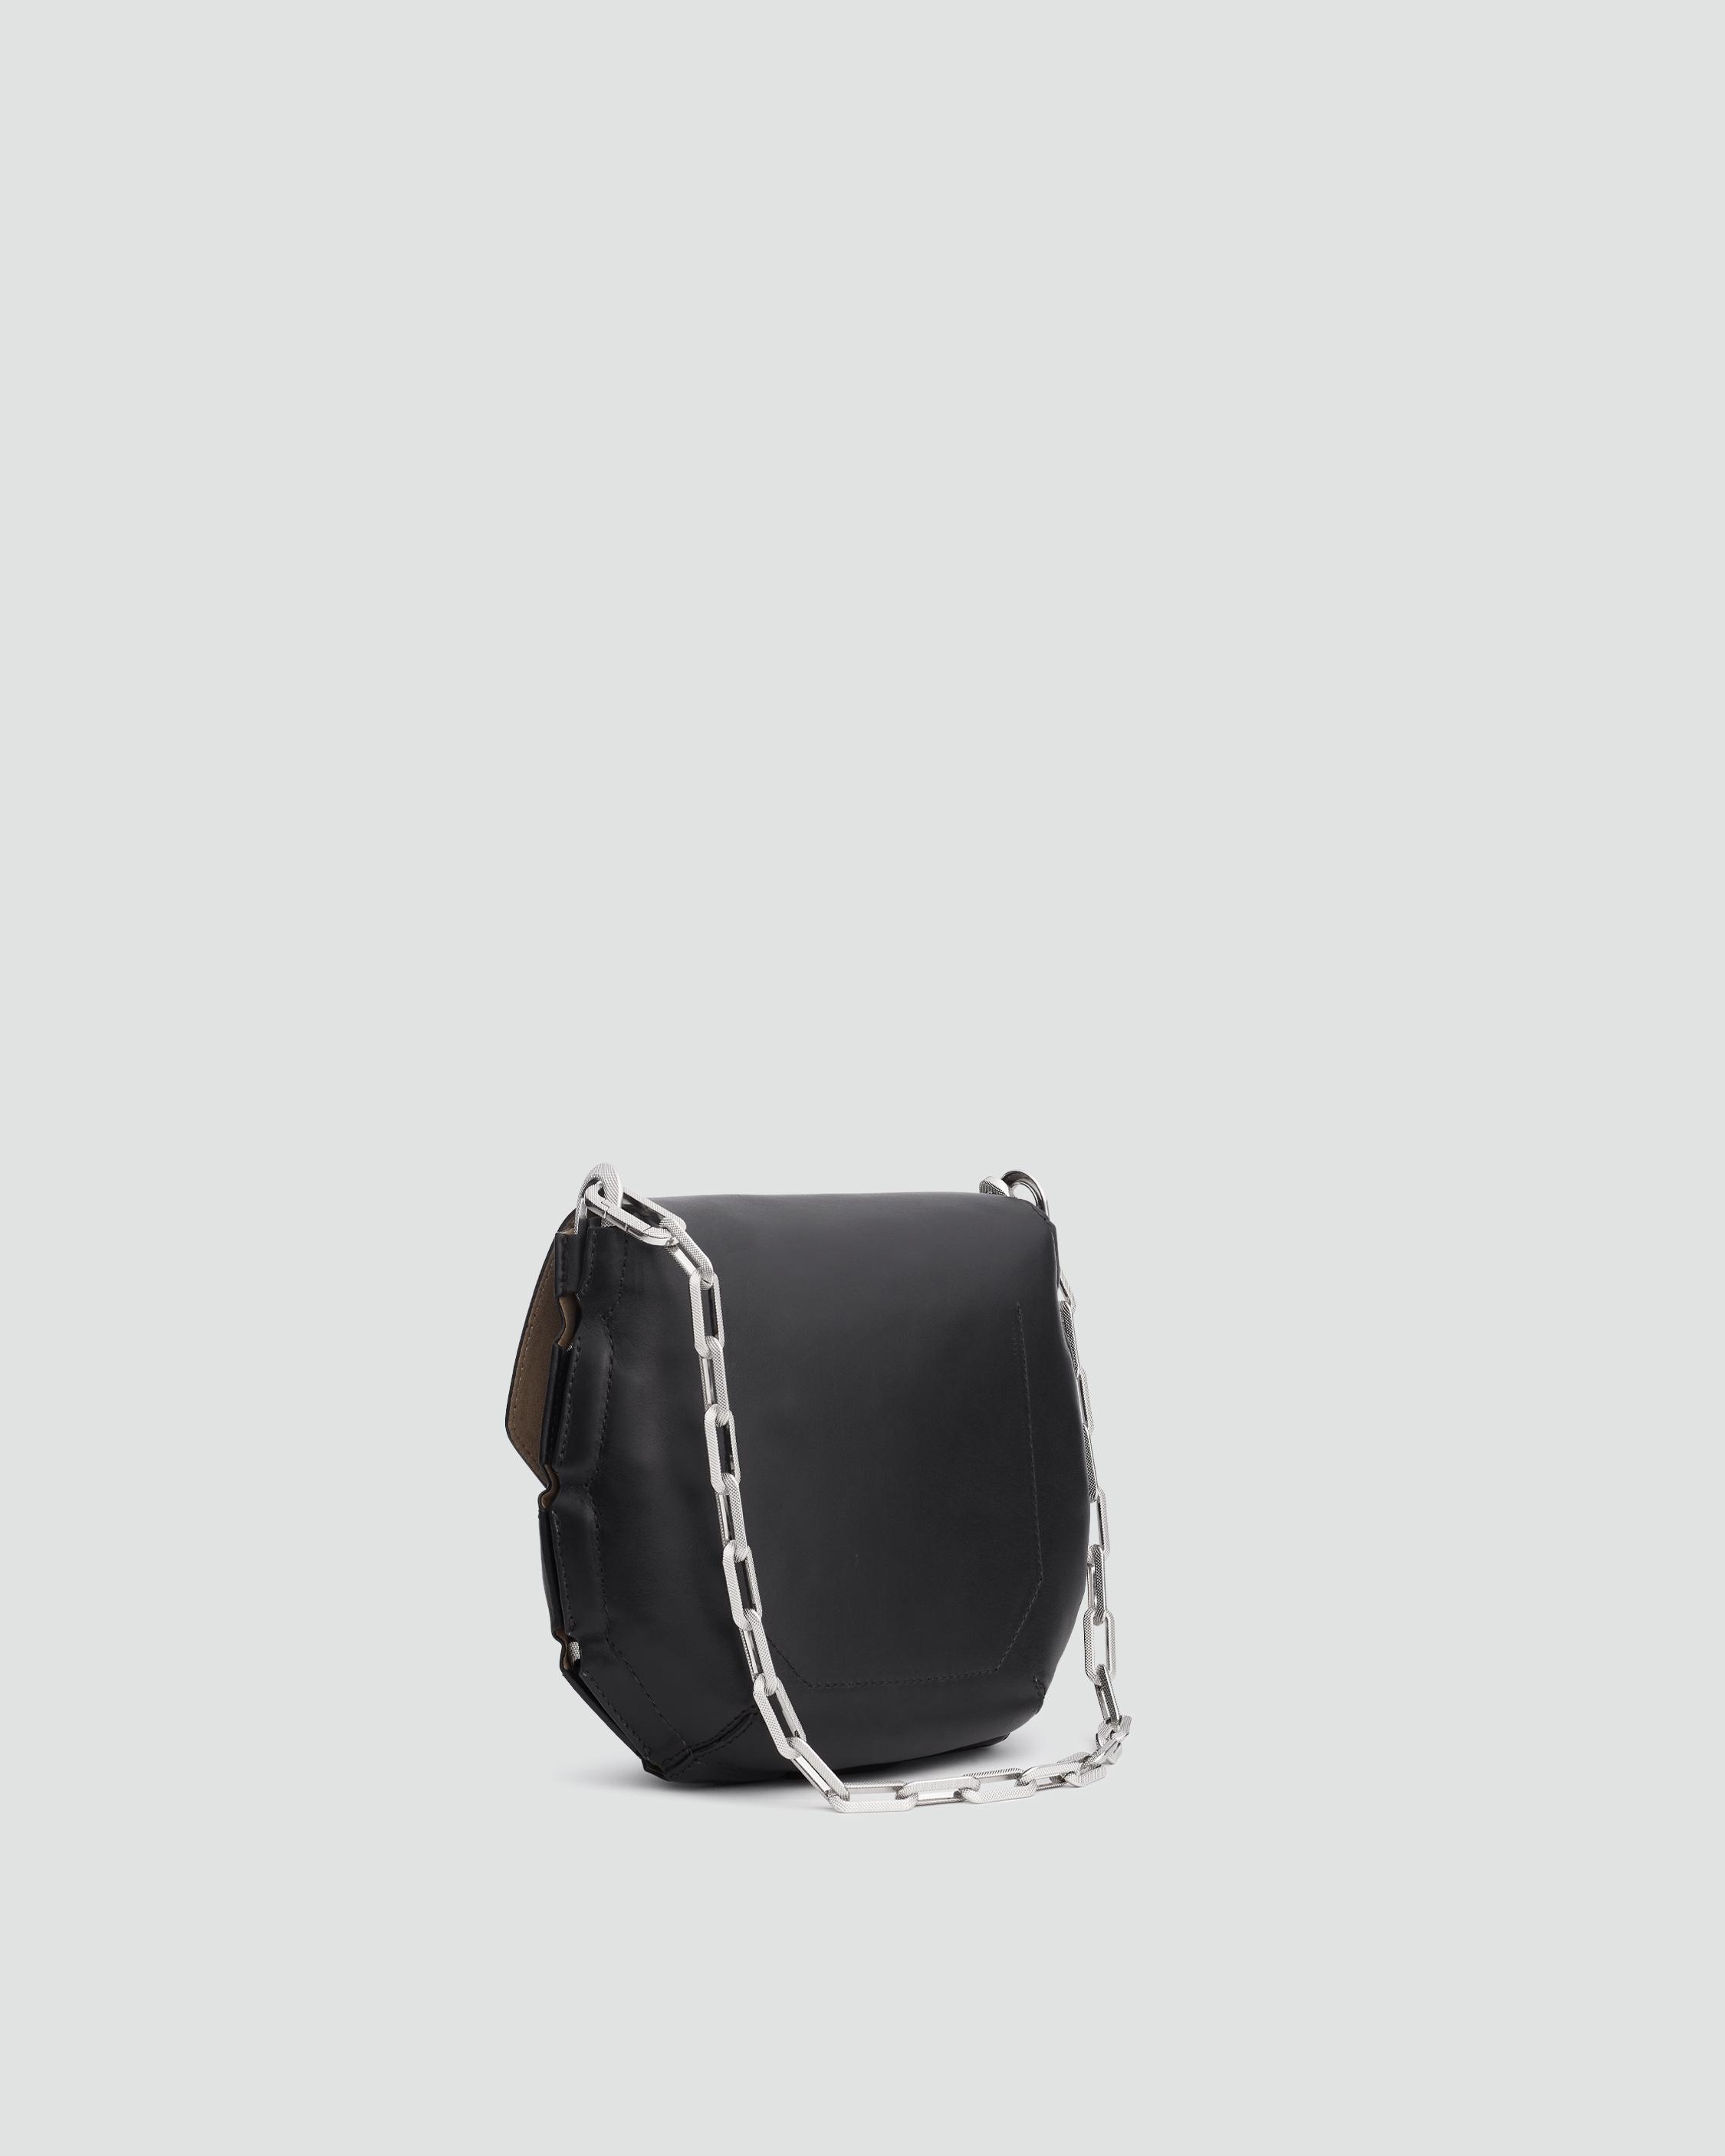 Sadie Shoulder Bag - Leather
Small Crossbody - 3